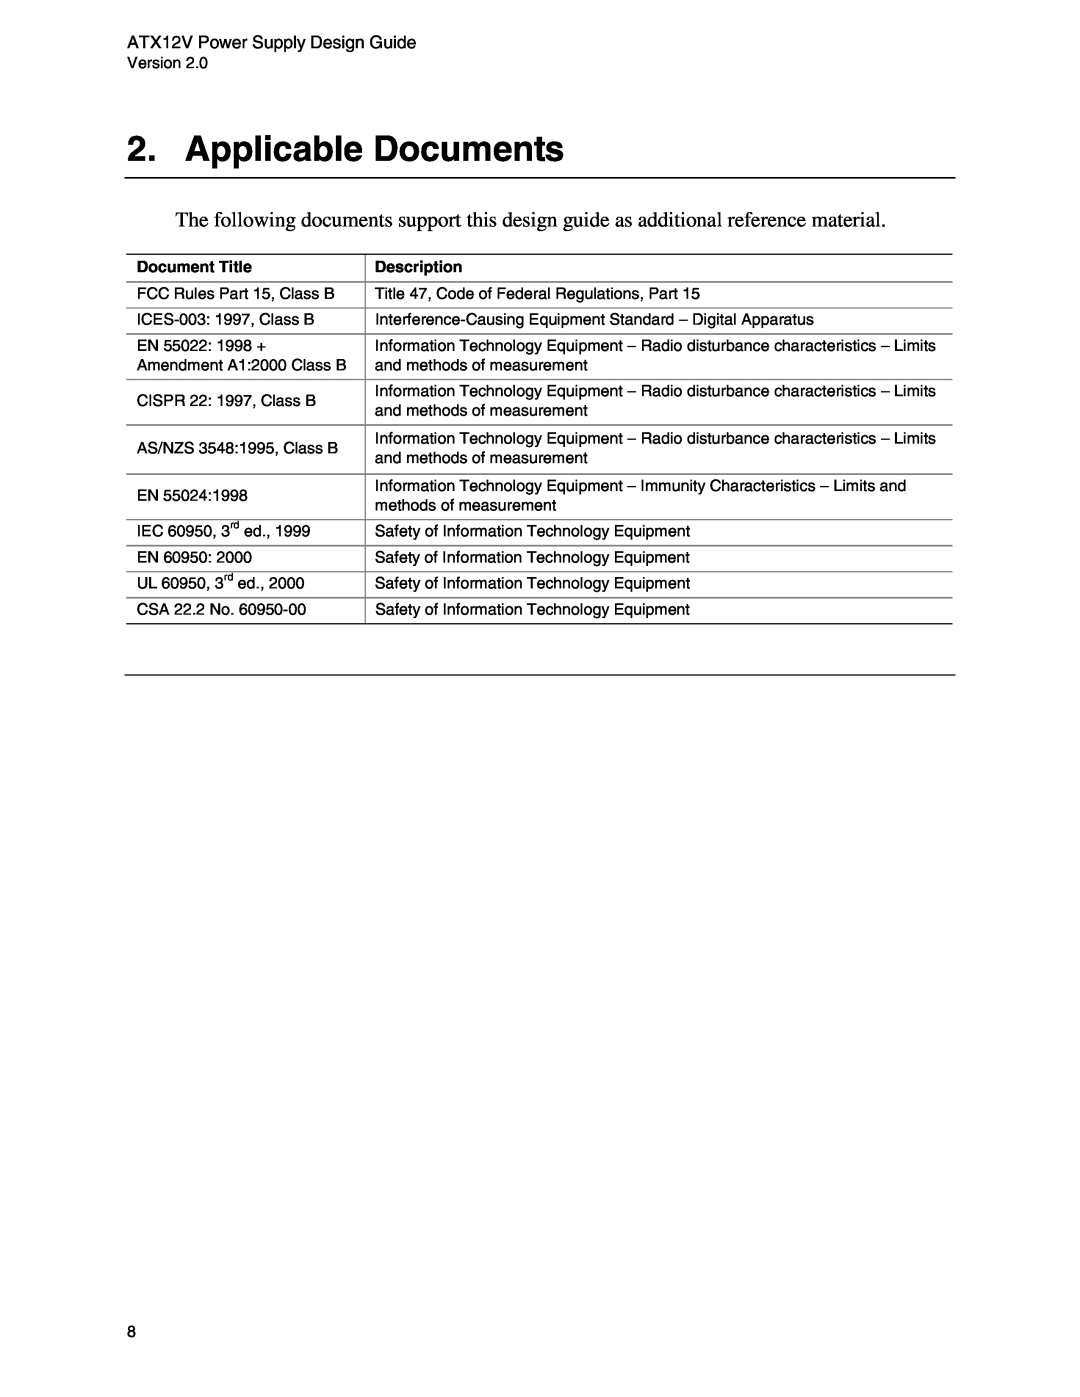 Intel ATX12V manual Applicable Documents, Document Title, Description 